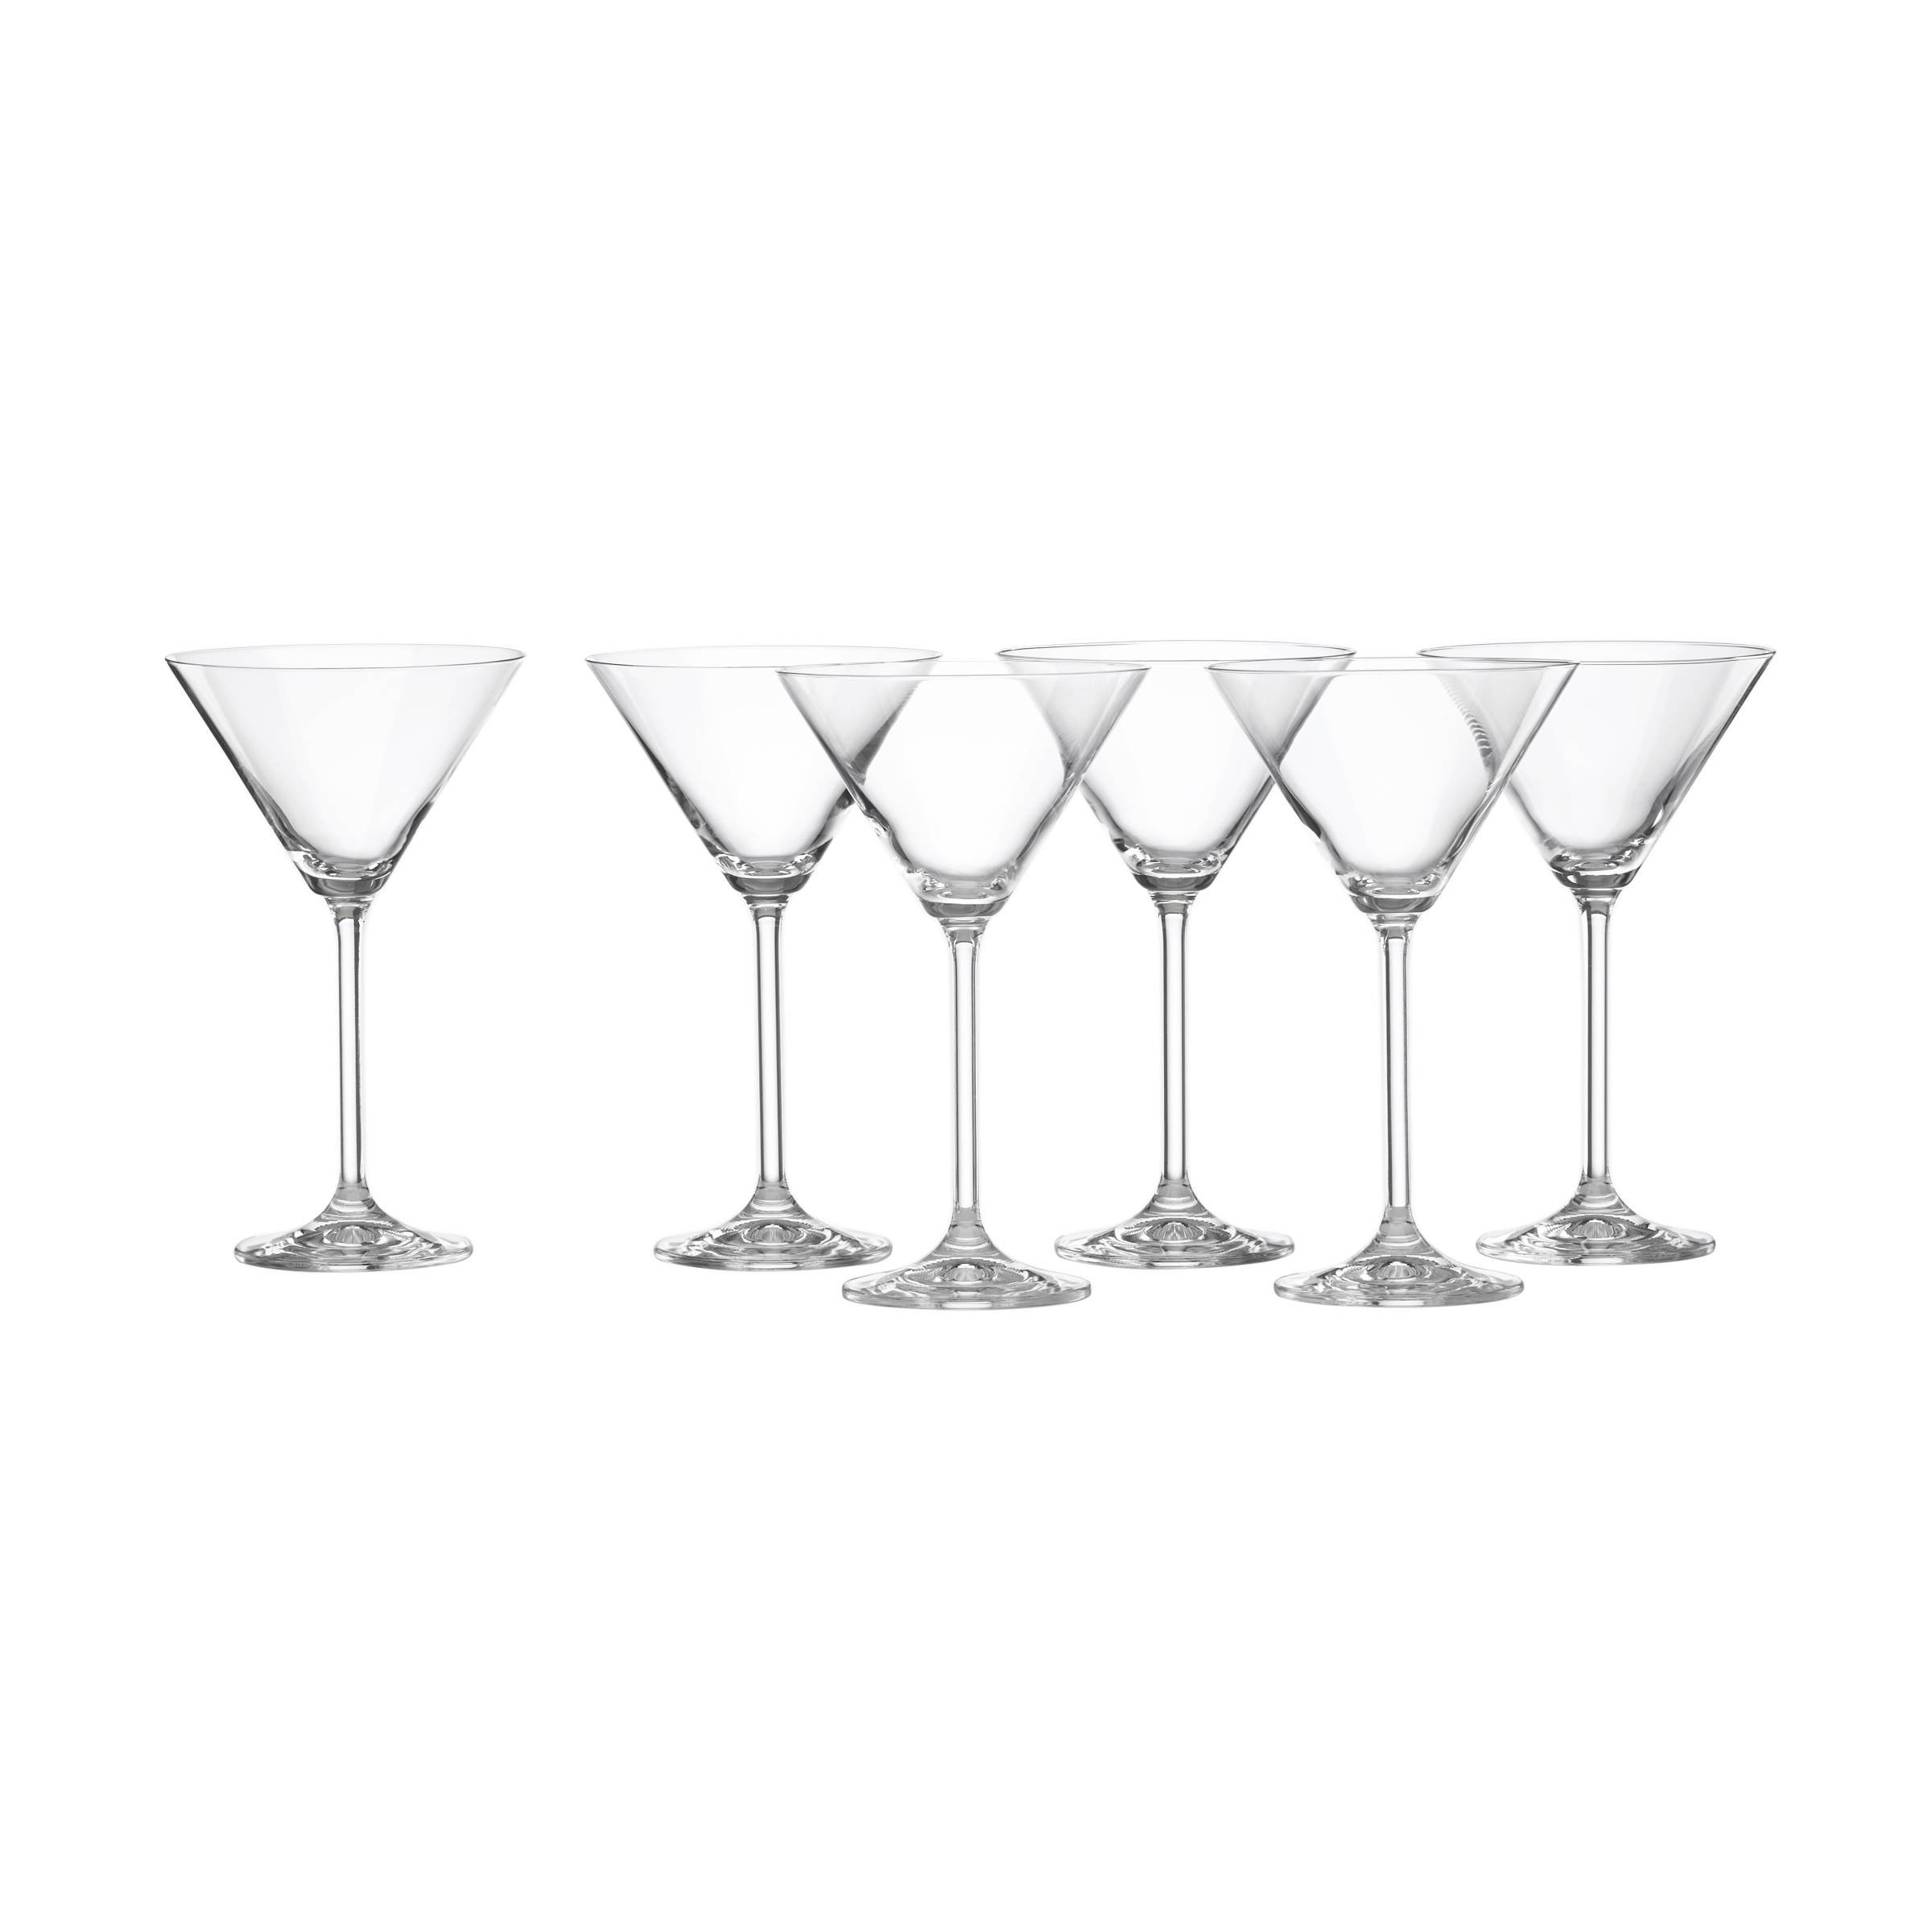 Godinger Martini Glasses,Italian Made Cocktail Glass Set of 4, 8oz